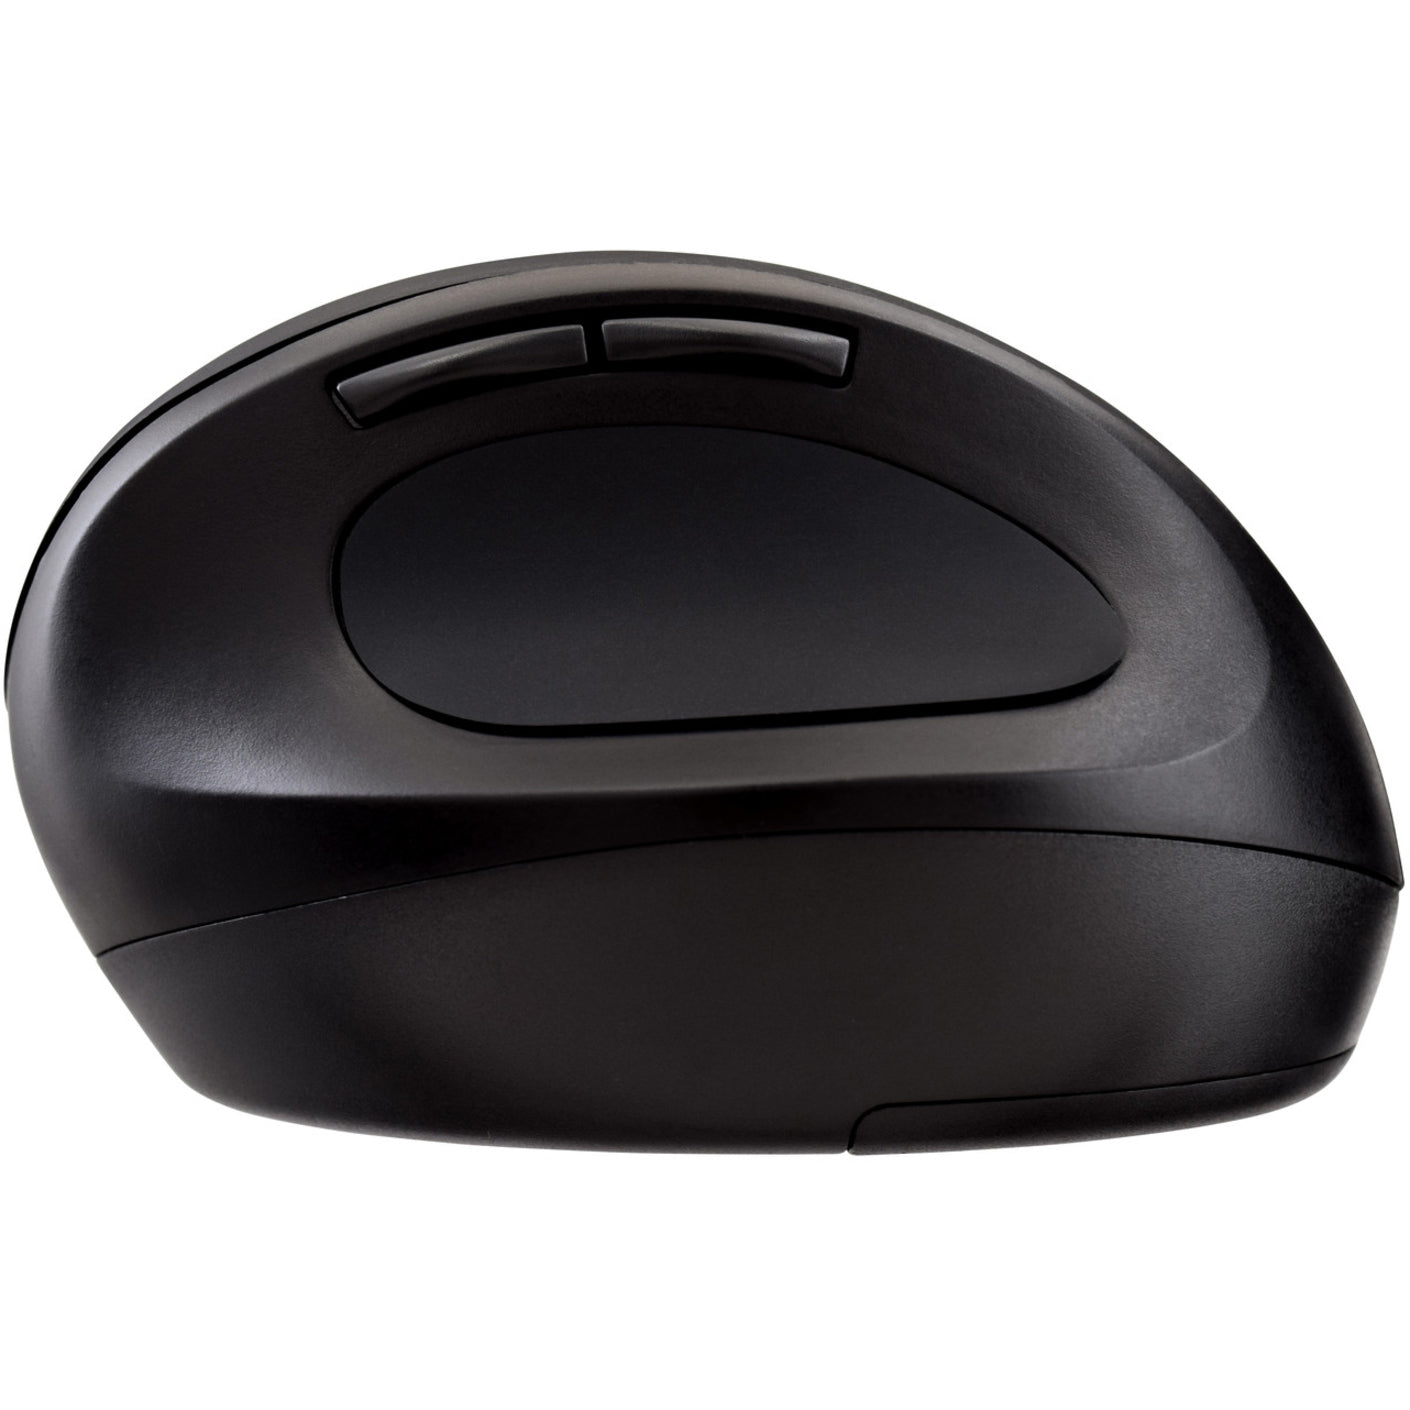 V7 Wireless Ergonomic 7-Button/Adjustable DPI Mouse - Black [Discontinued]